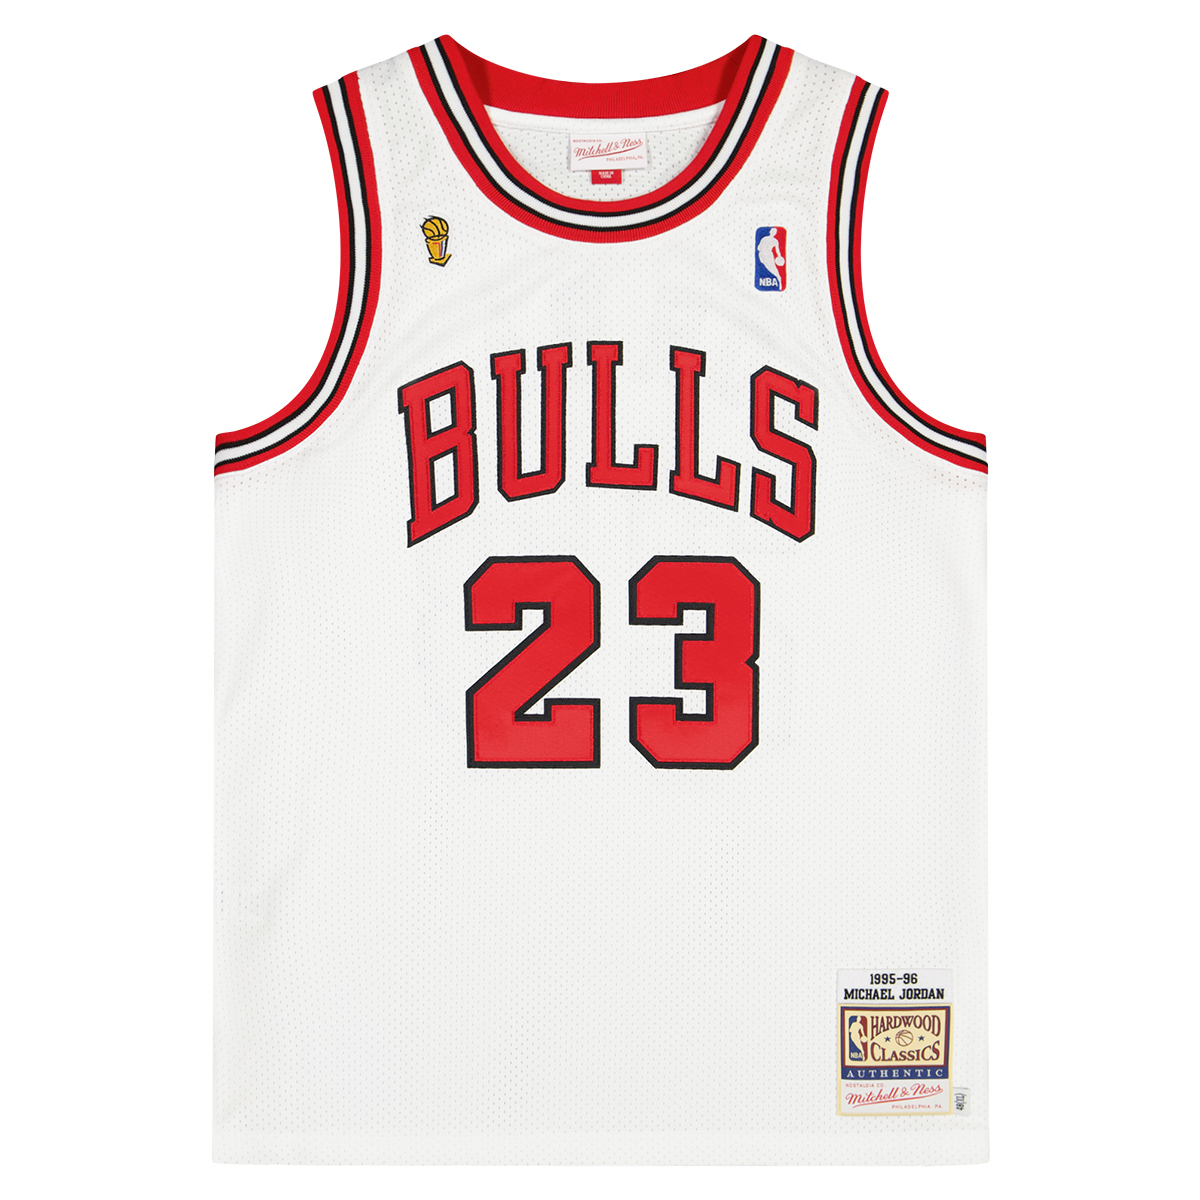 NIKE MICHAEL JORDAN NBA CHICAGO BULLS #23 JERSEY DRESS SKIRT